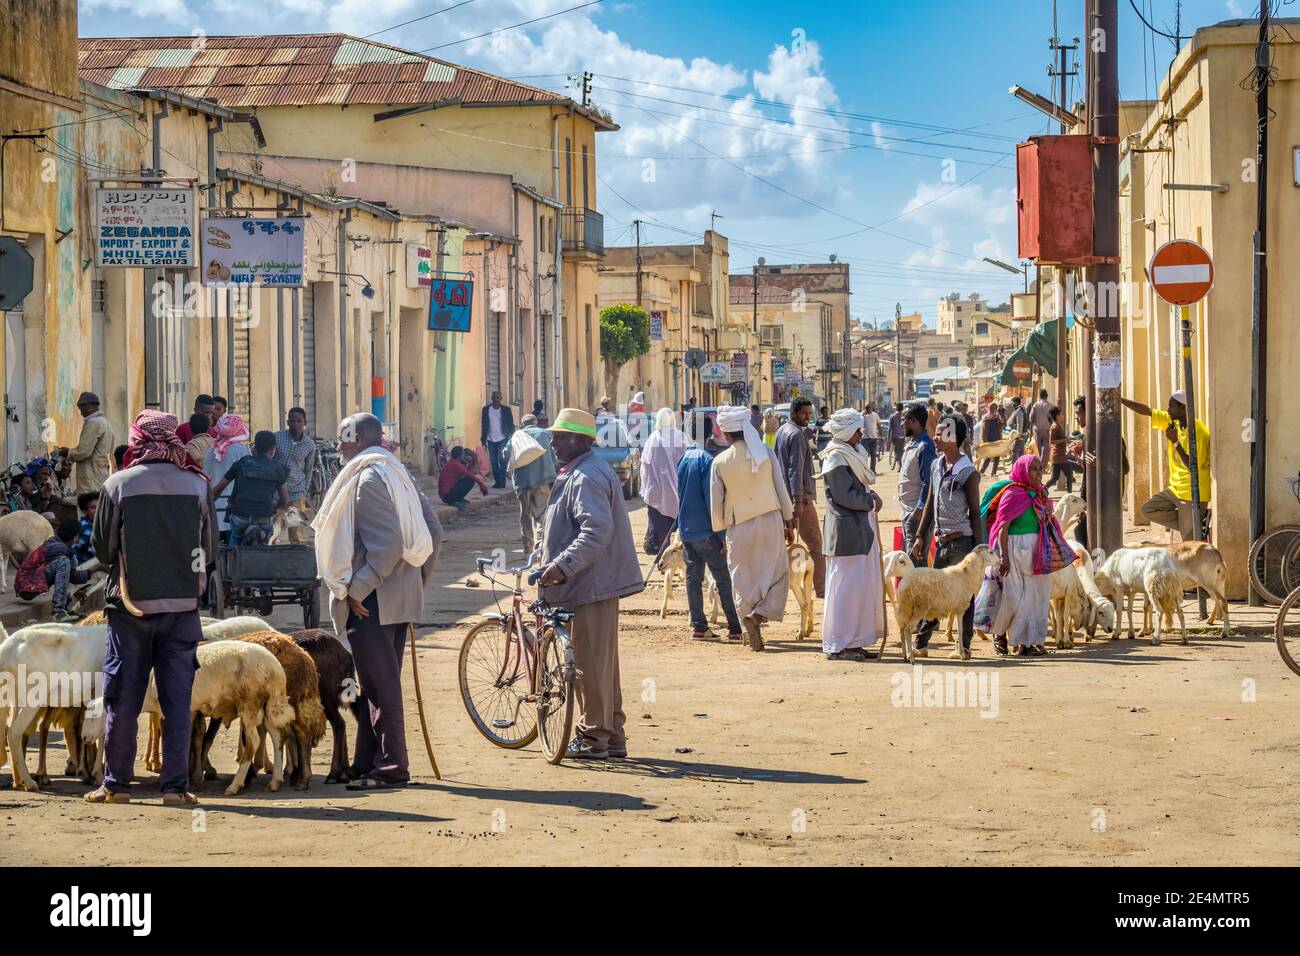 People socialize at market in central Asmara Eritrea. Stock Photo